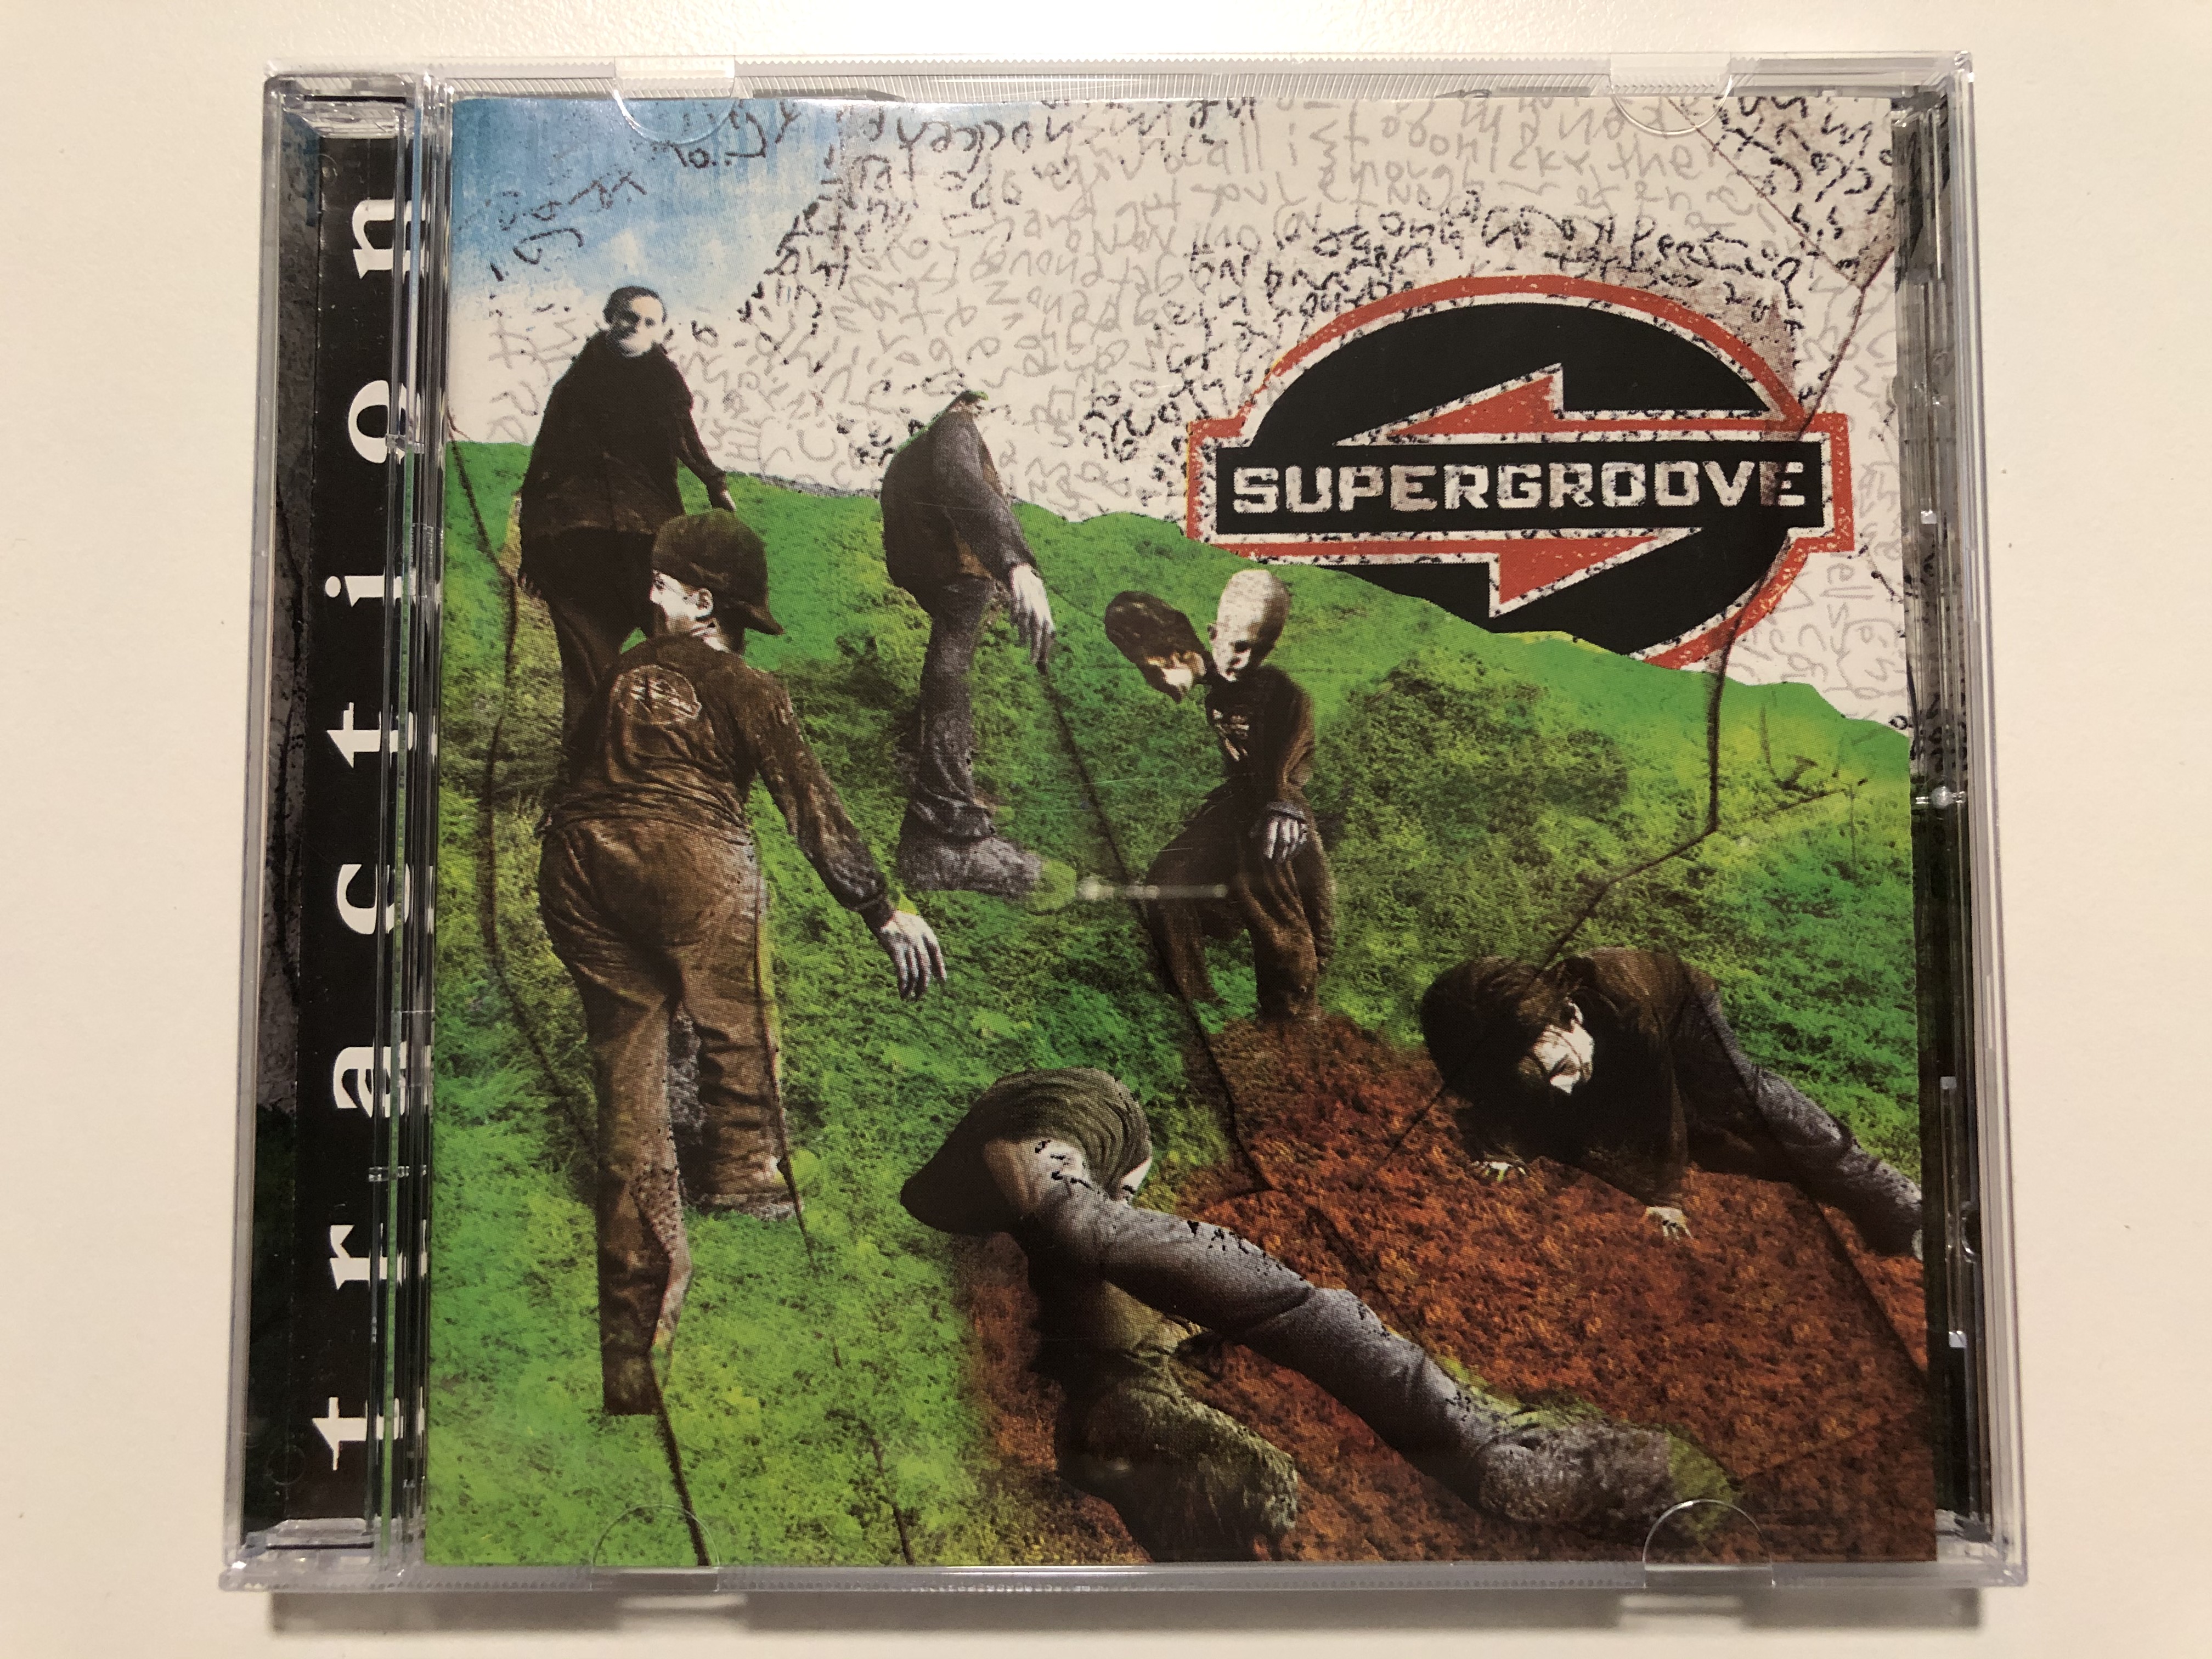 supergroove-traction-bmg-audio-cd-1994-74321-27954-2-1-.jpg